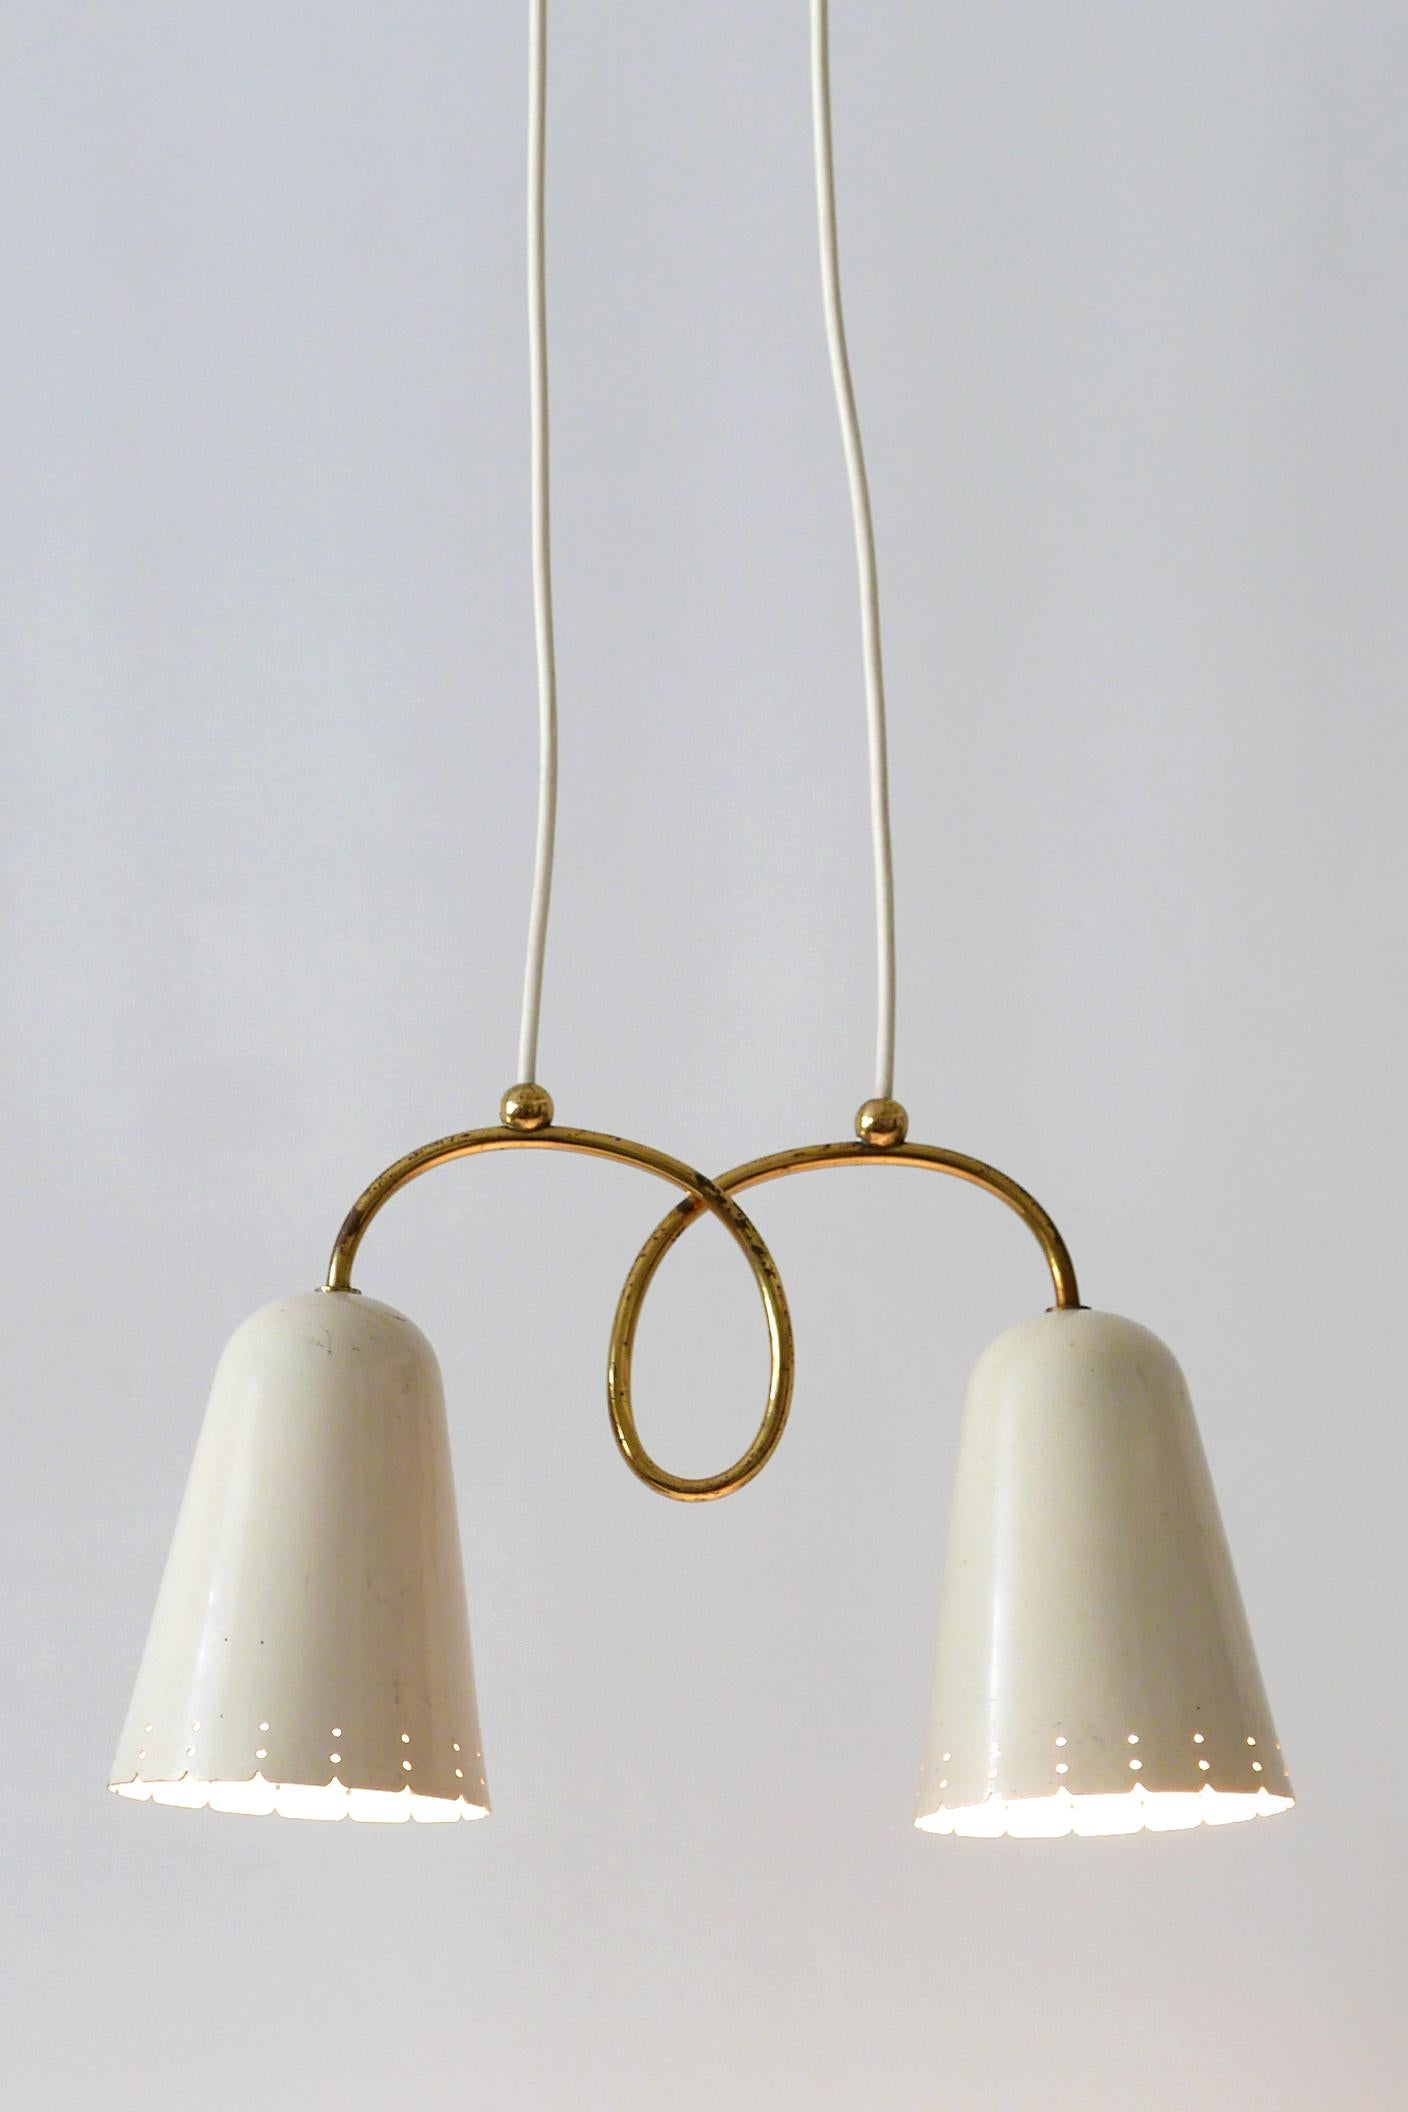 Rare Mid-Century Modern Double Head Pendant Lamp or Hanging Light 1950s, Germany 8